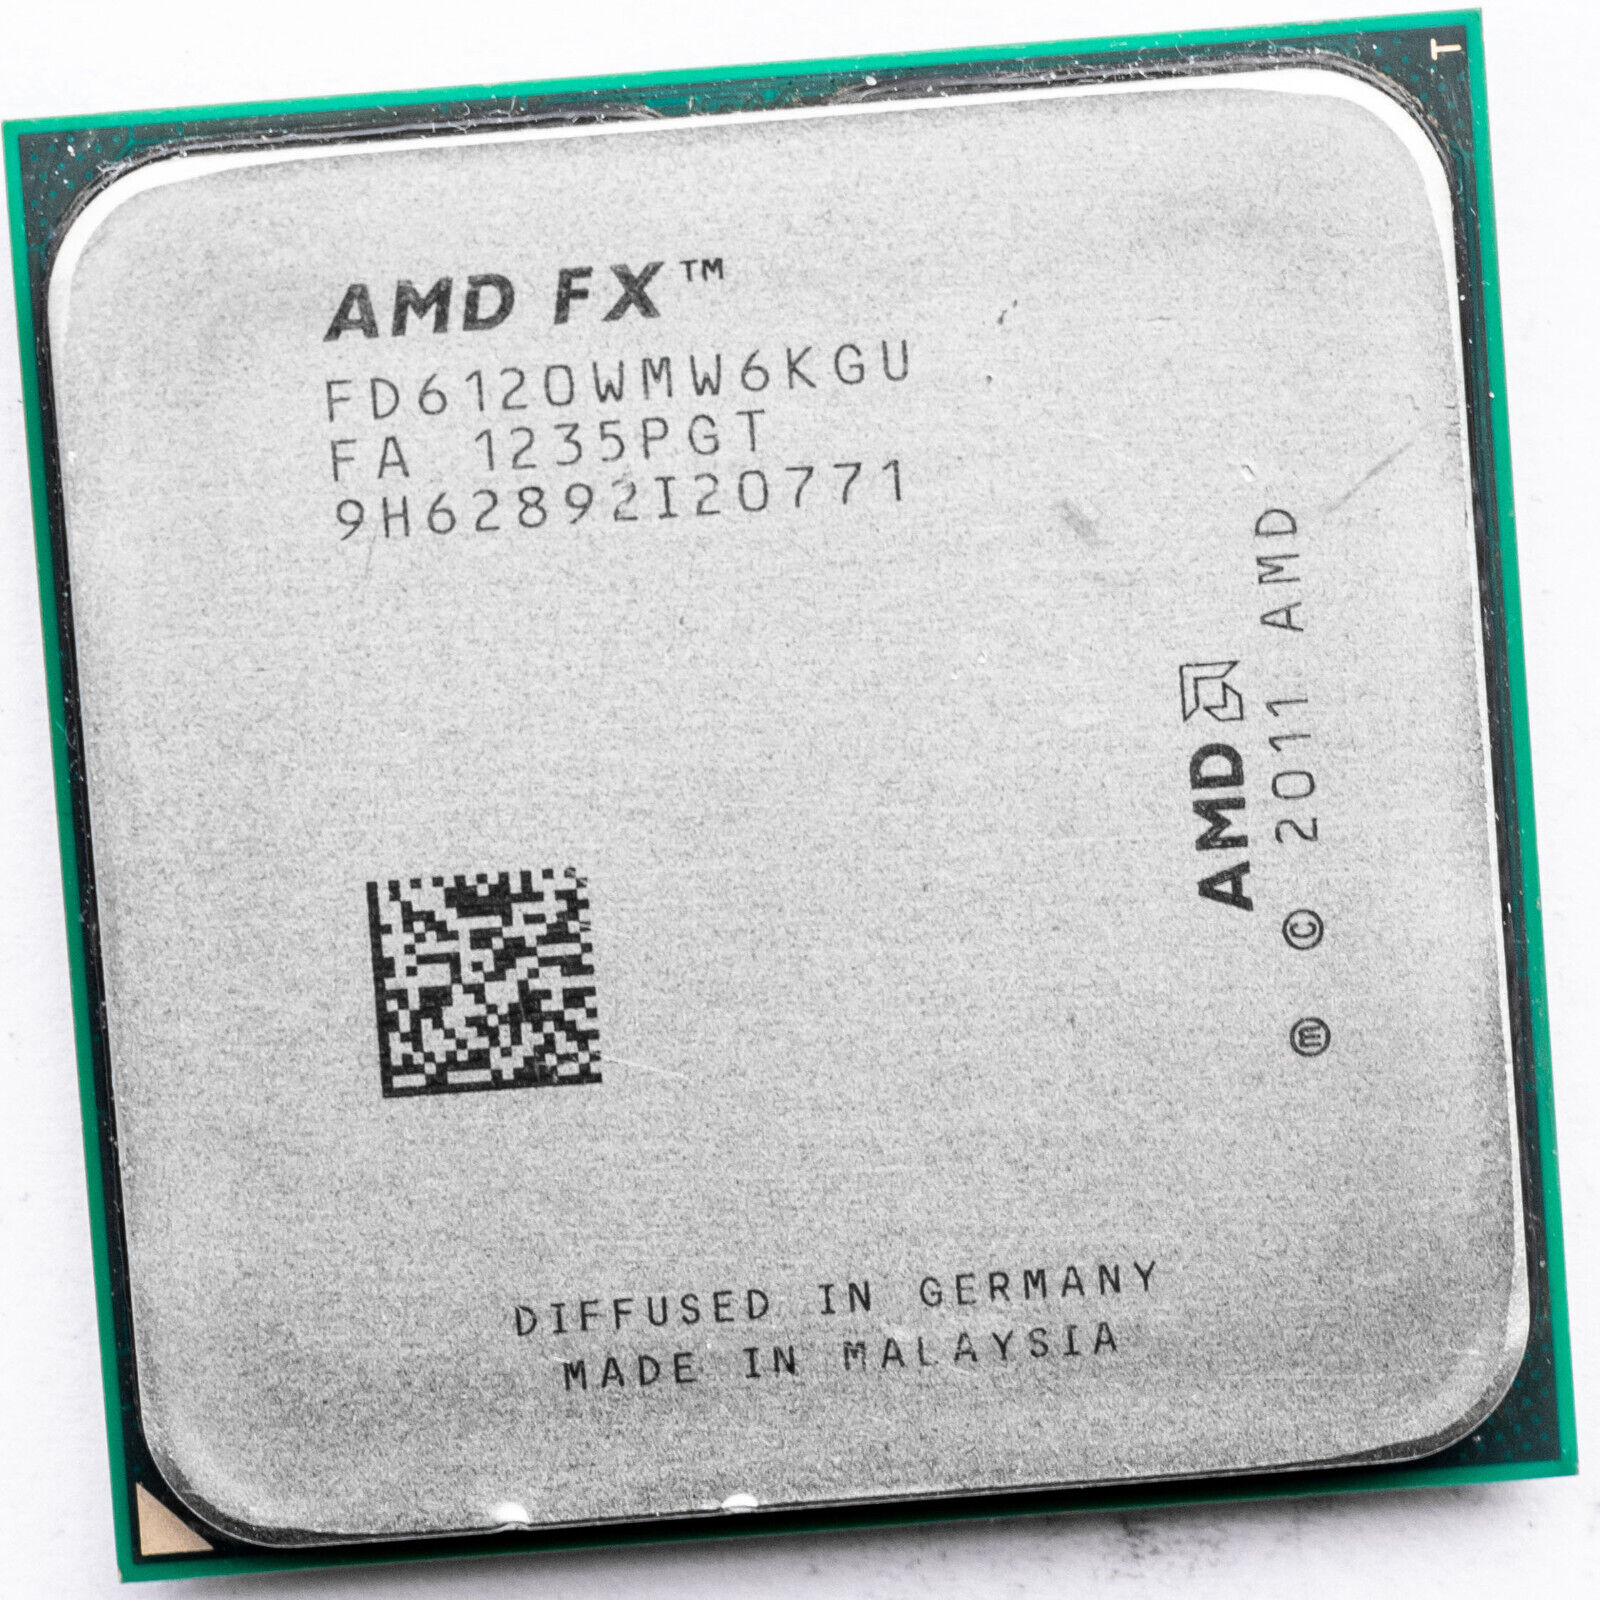 AMD FX-6120 FD6120WMW6KGU AM3+ 3.5GHz Six Core Processor Zambezi 95W 8MB 32nm